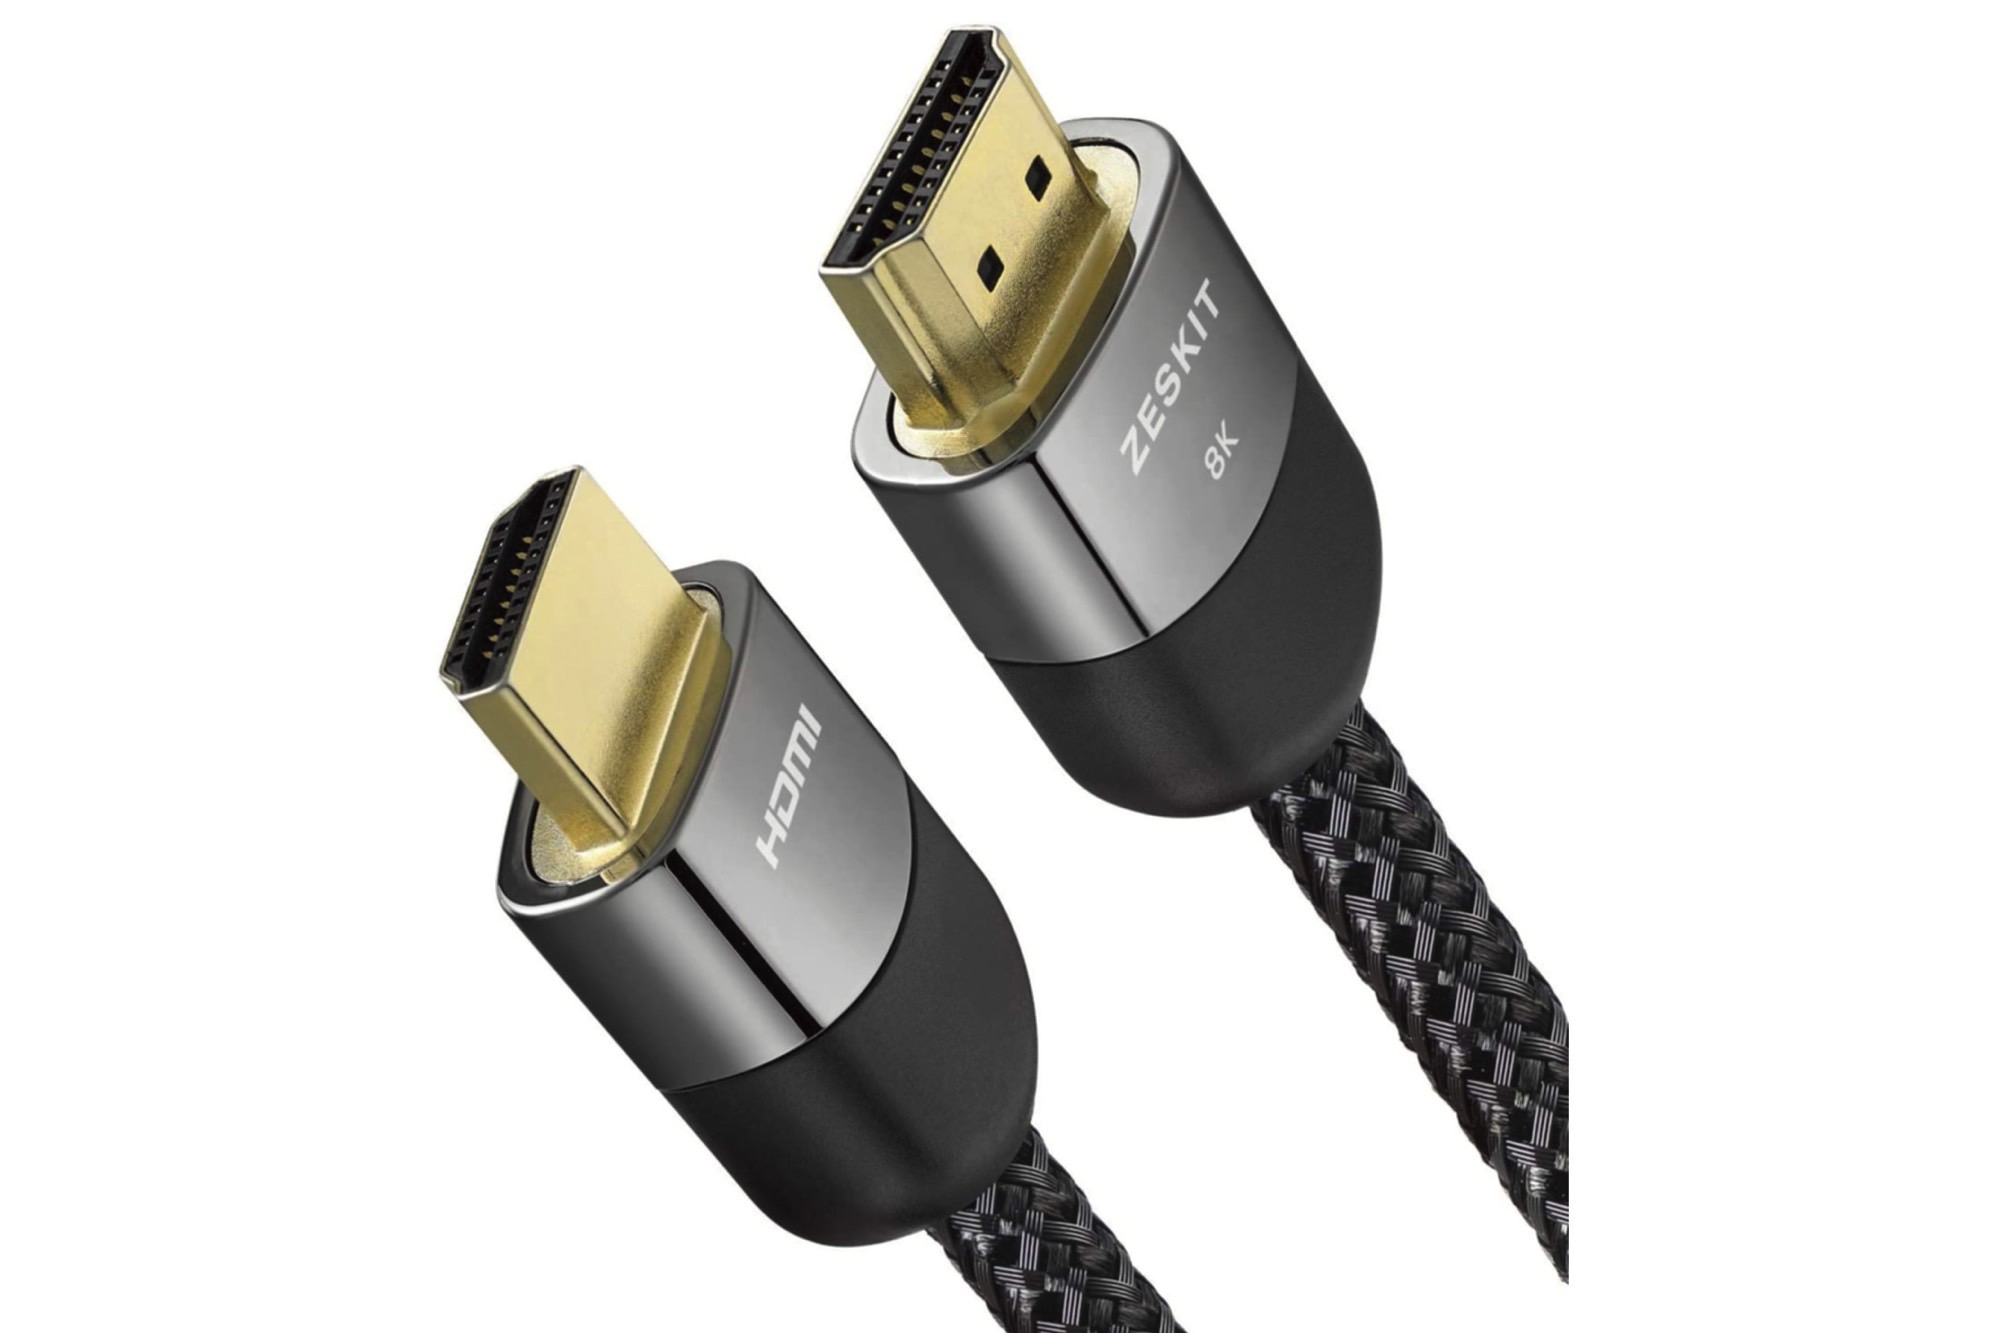 Monoprice Premium High Speed Hdmi Cable - 10 Feet - Black